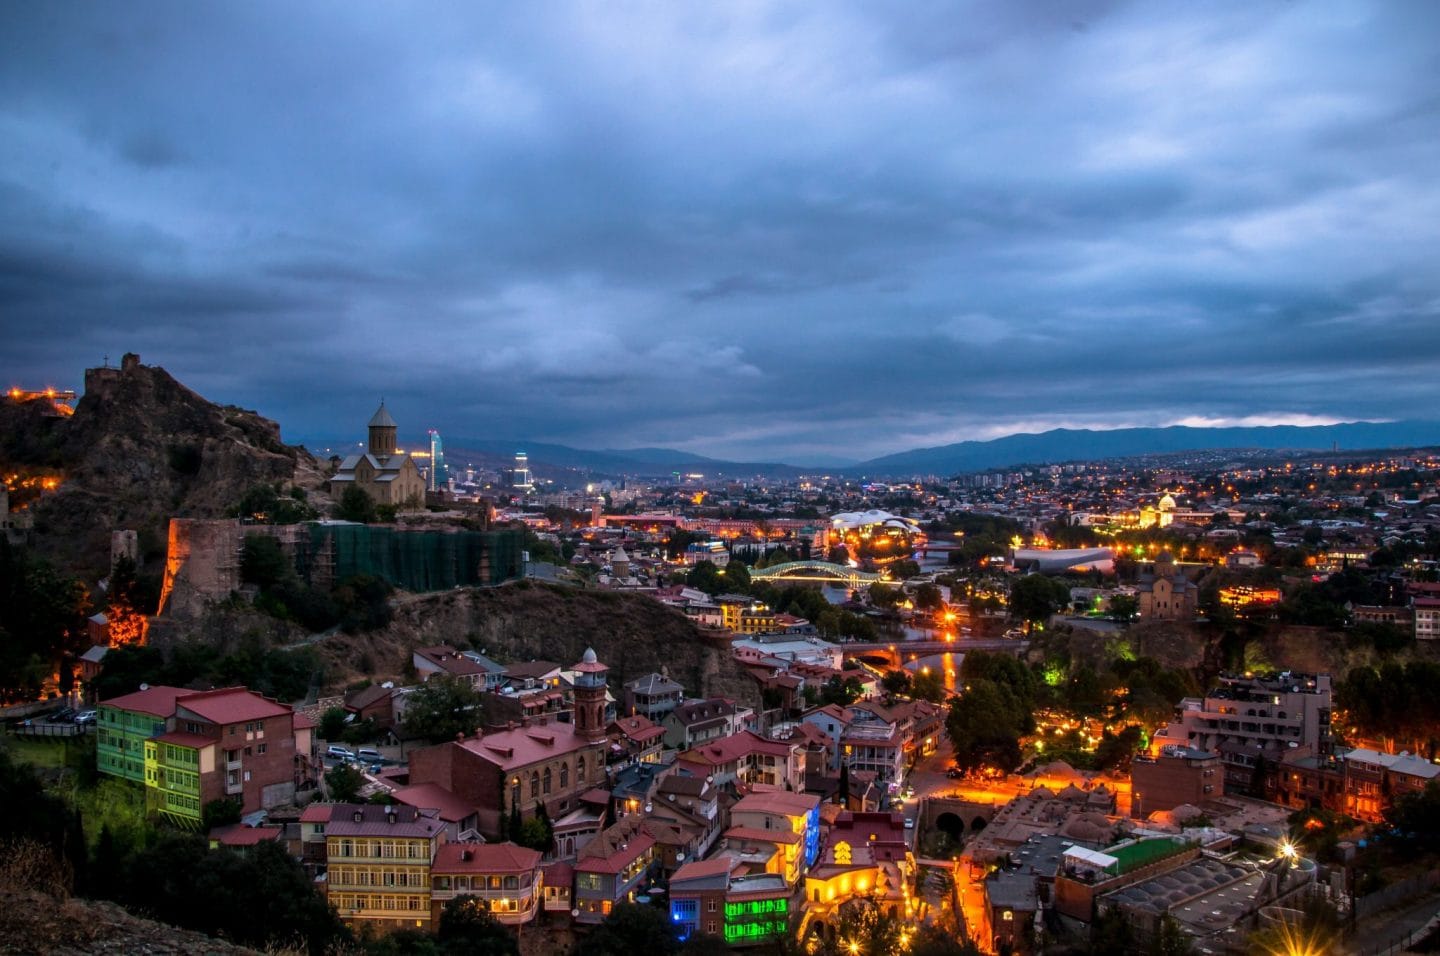 Tbilisi at night 